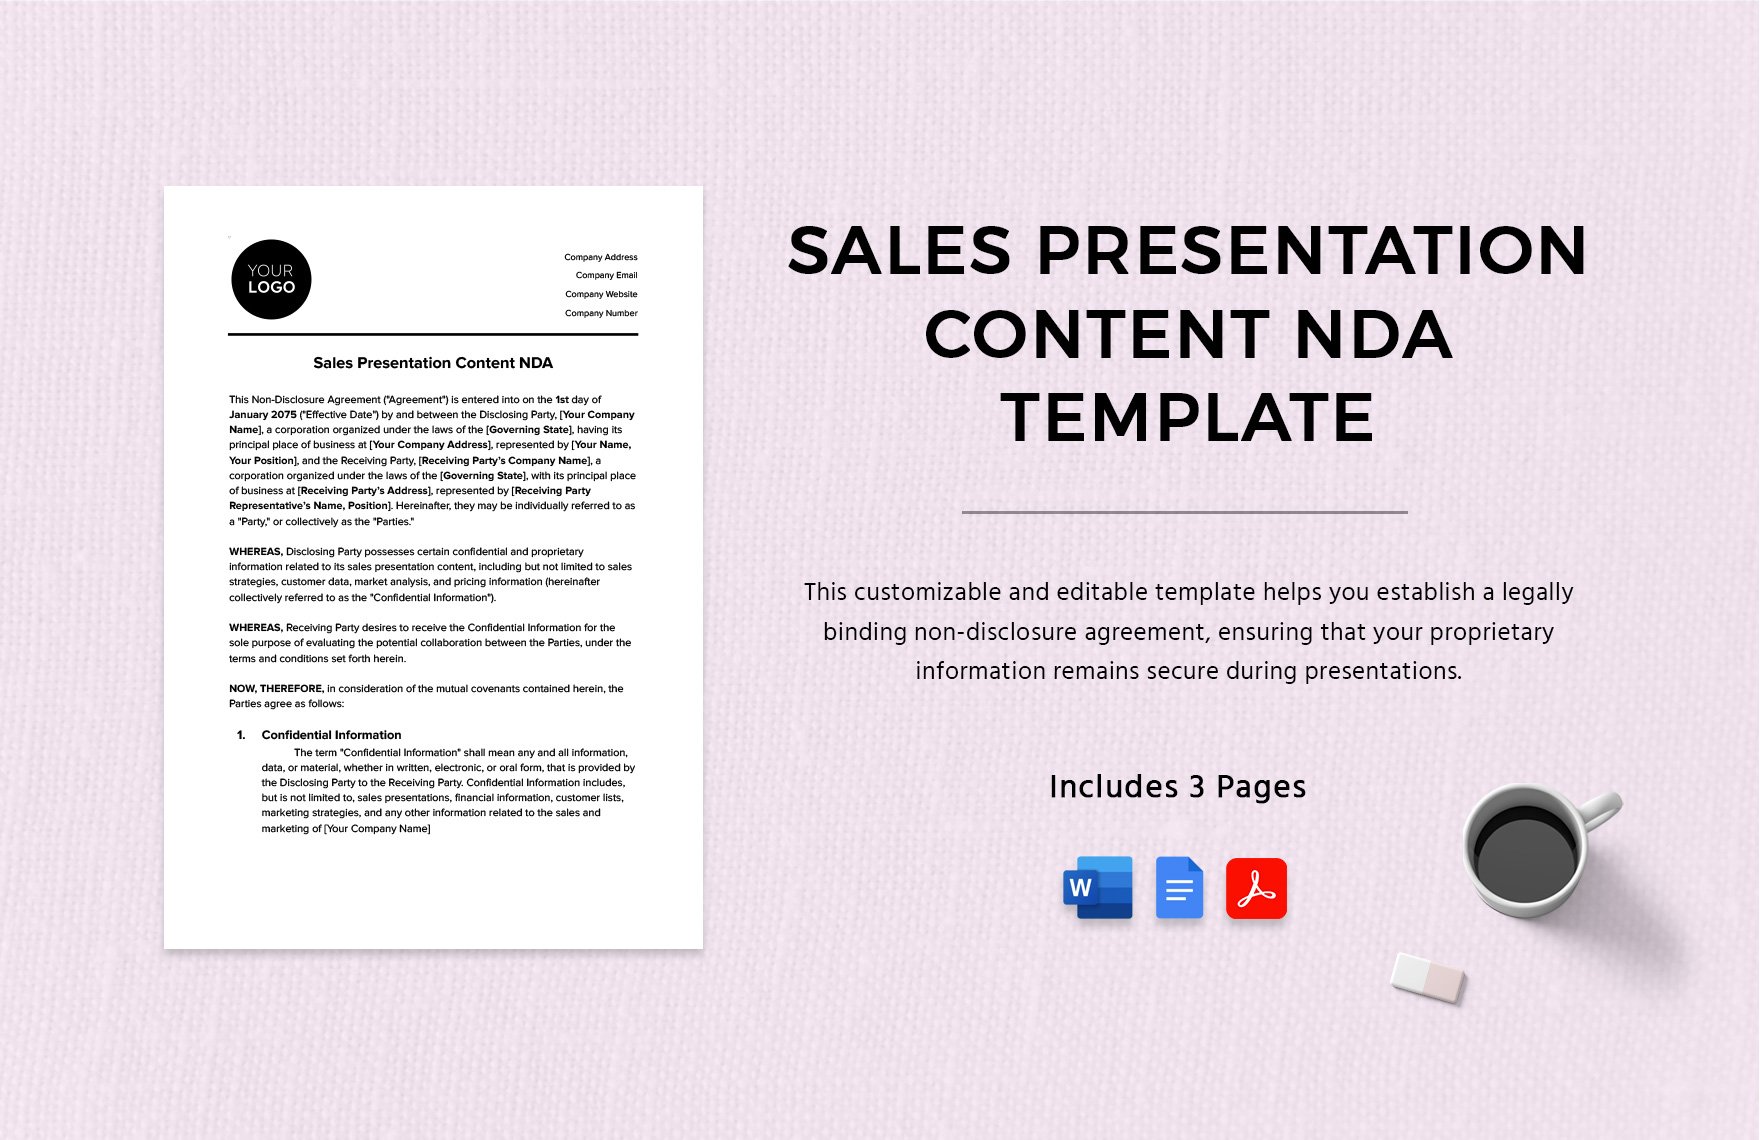 Sales Presentation Content NDA Template